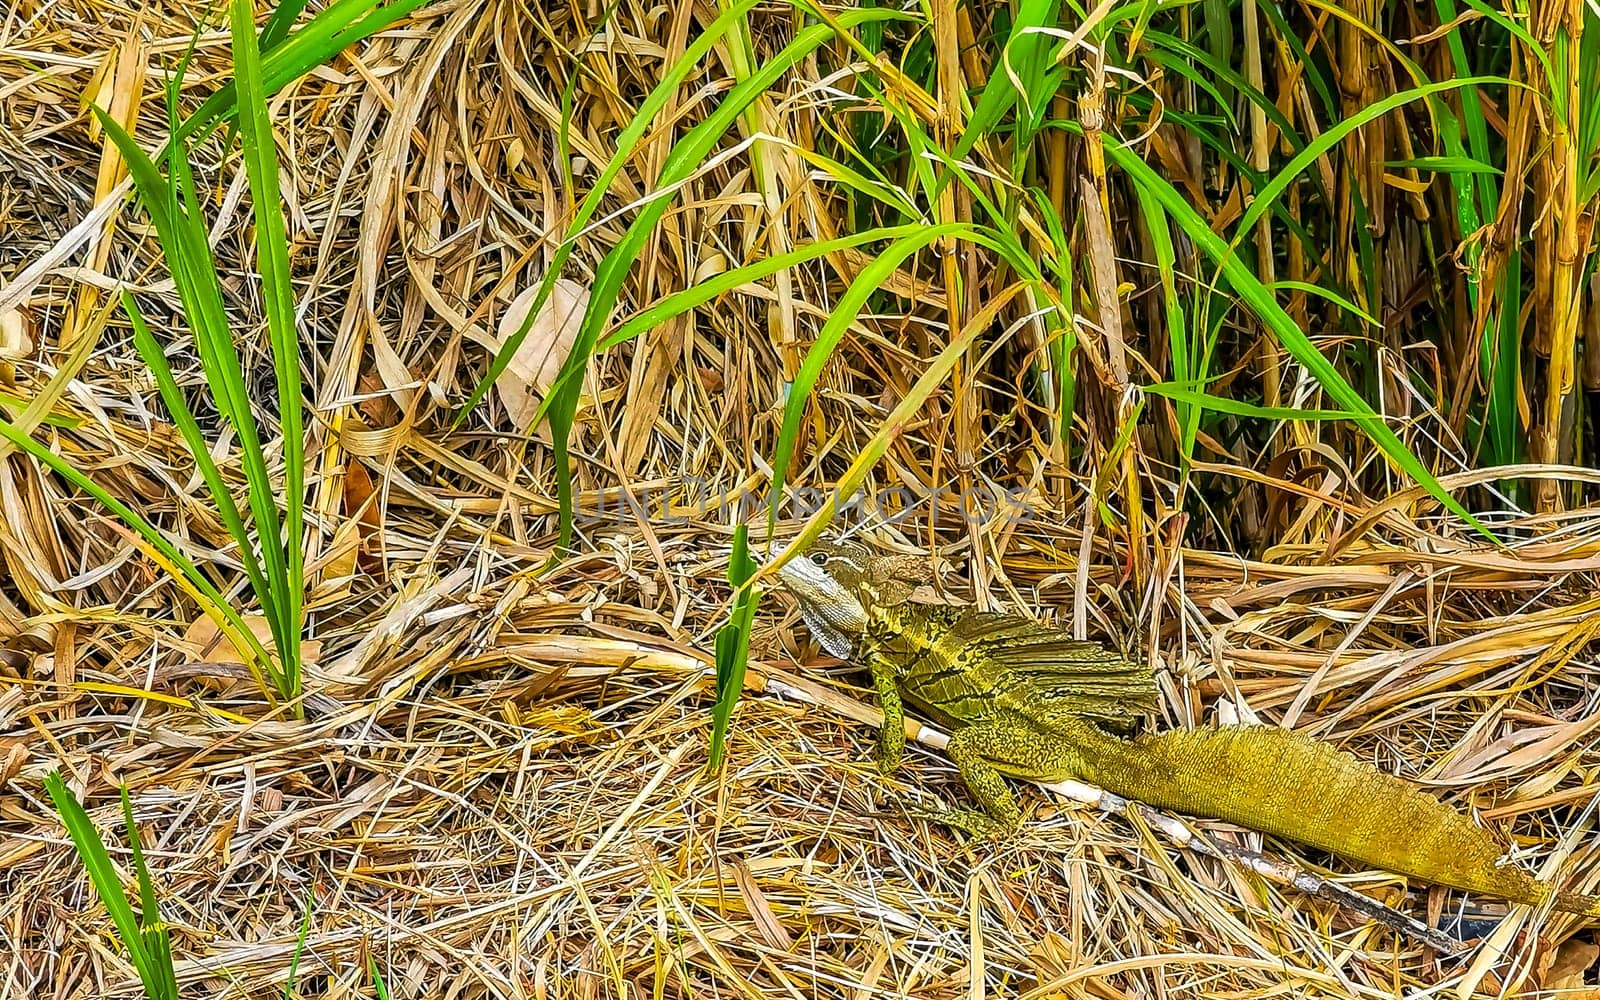 Green Tortuguero lizard iguana reptile in the grass Alajuela Costa Rica. by Arkadij